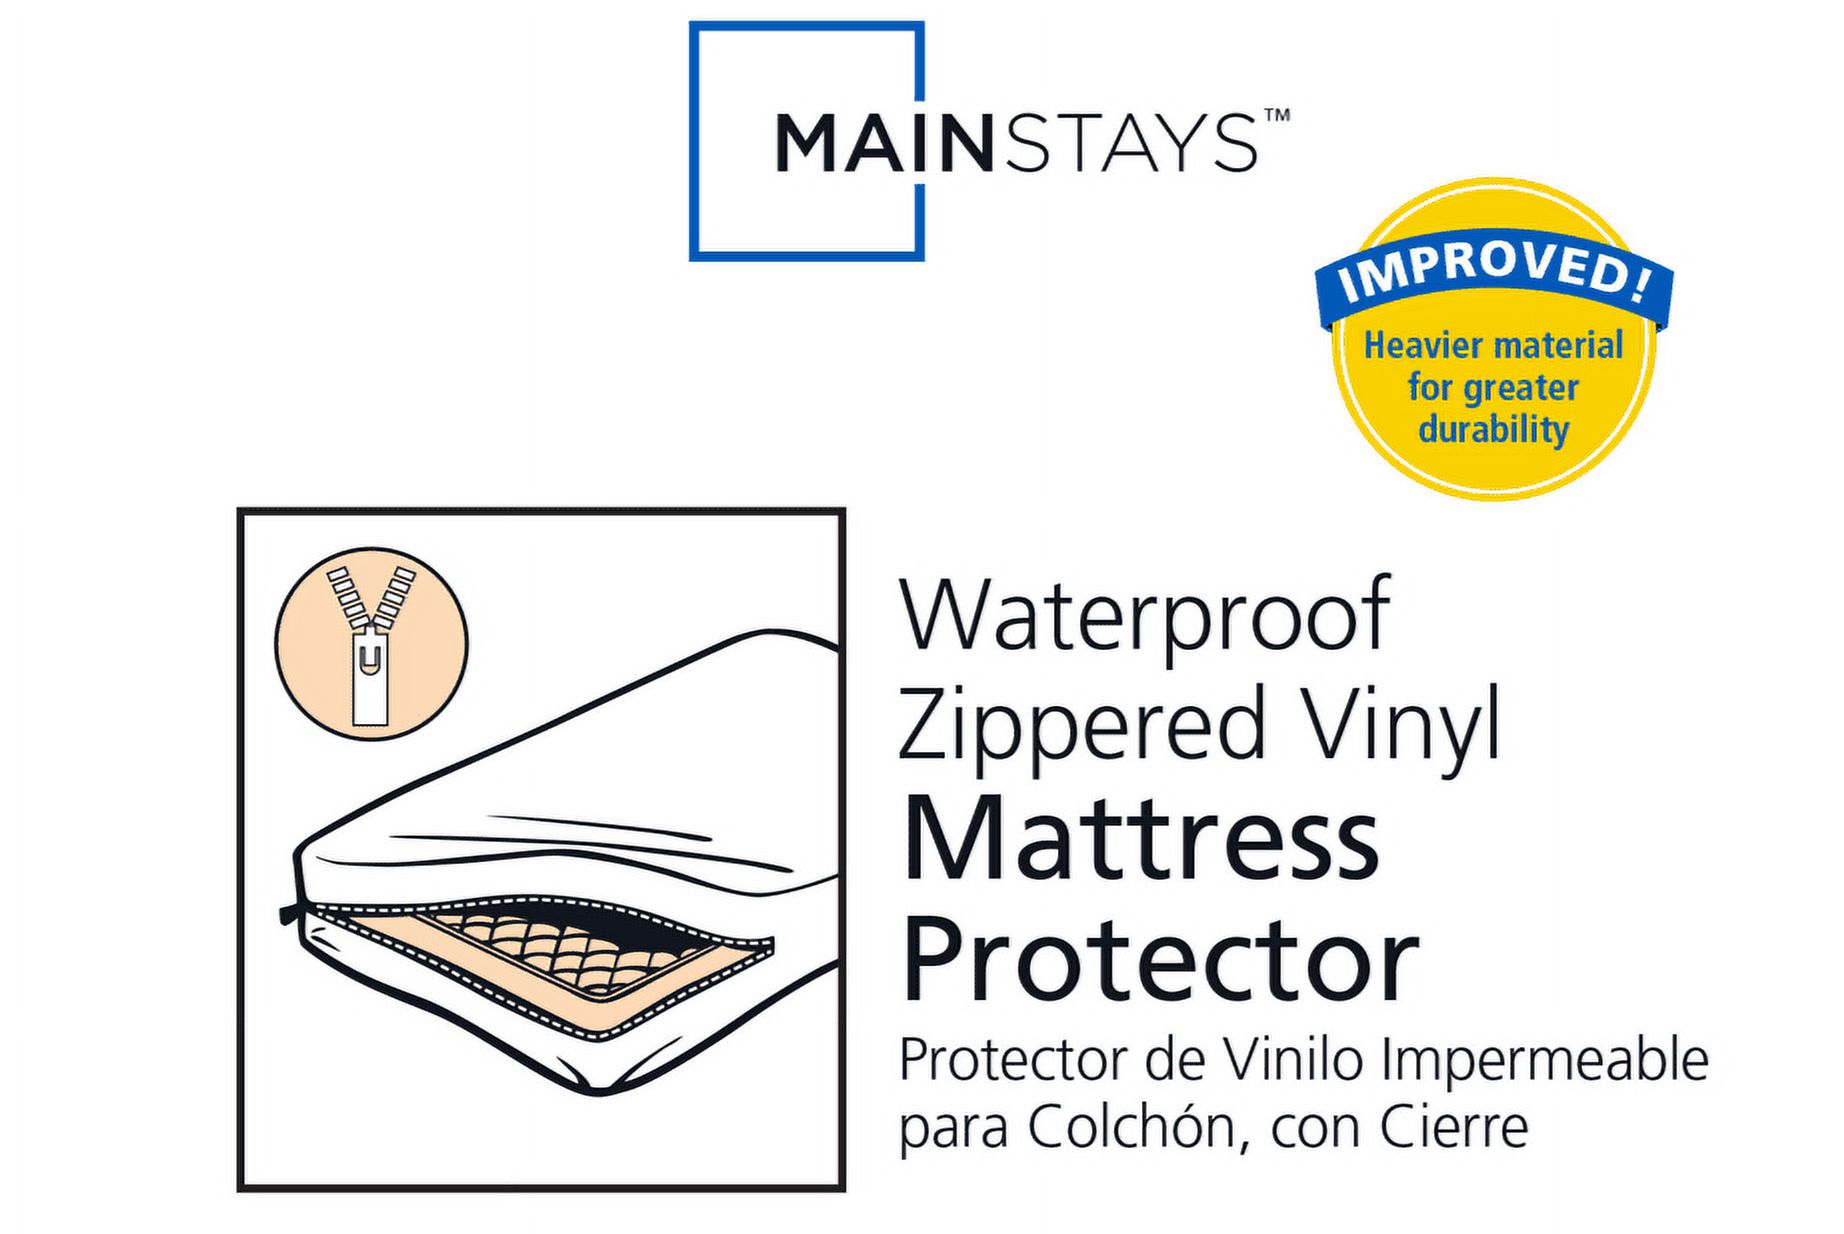 Mainstays Vinyl Waterproof Zippered White Mattress Protector, 1 Each - image 2 of 2